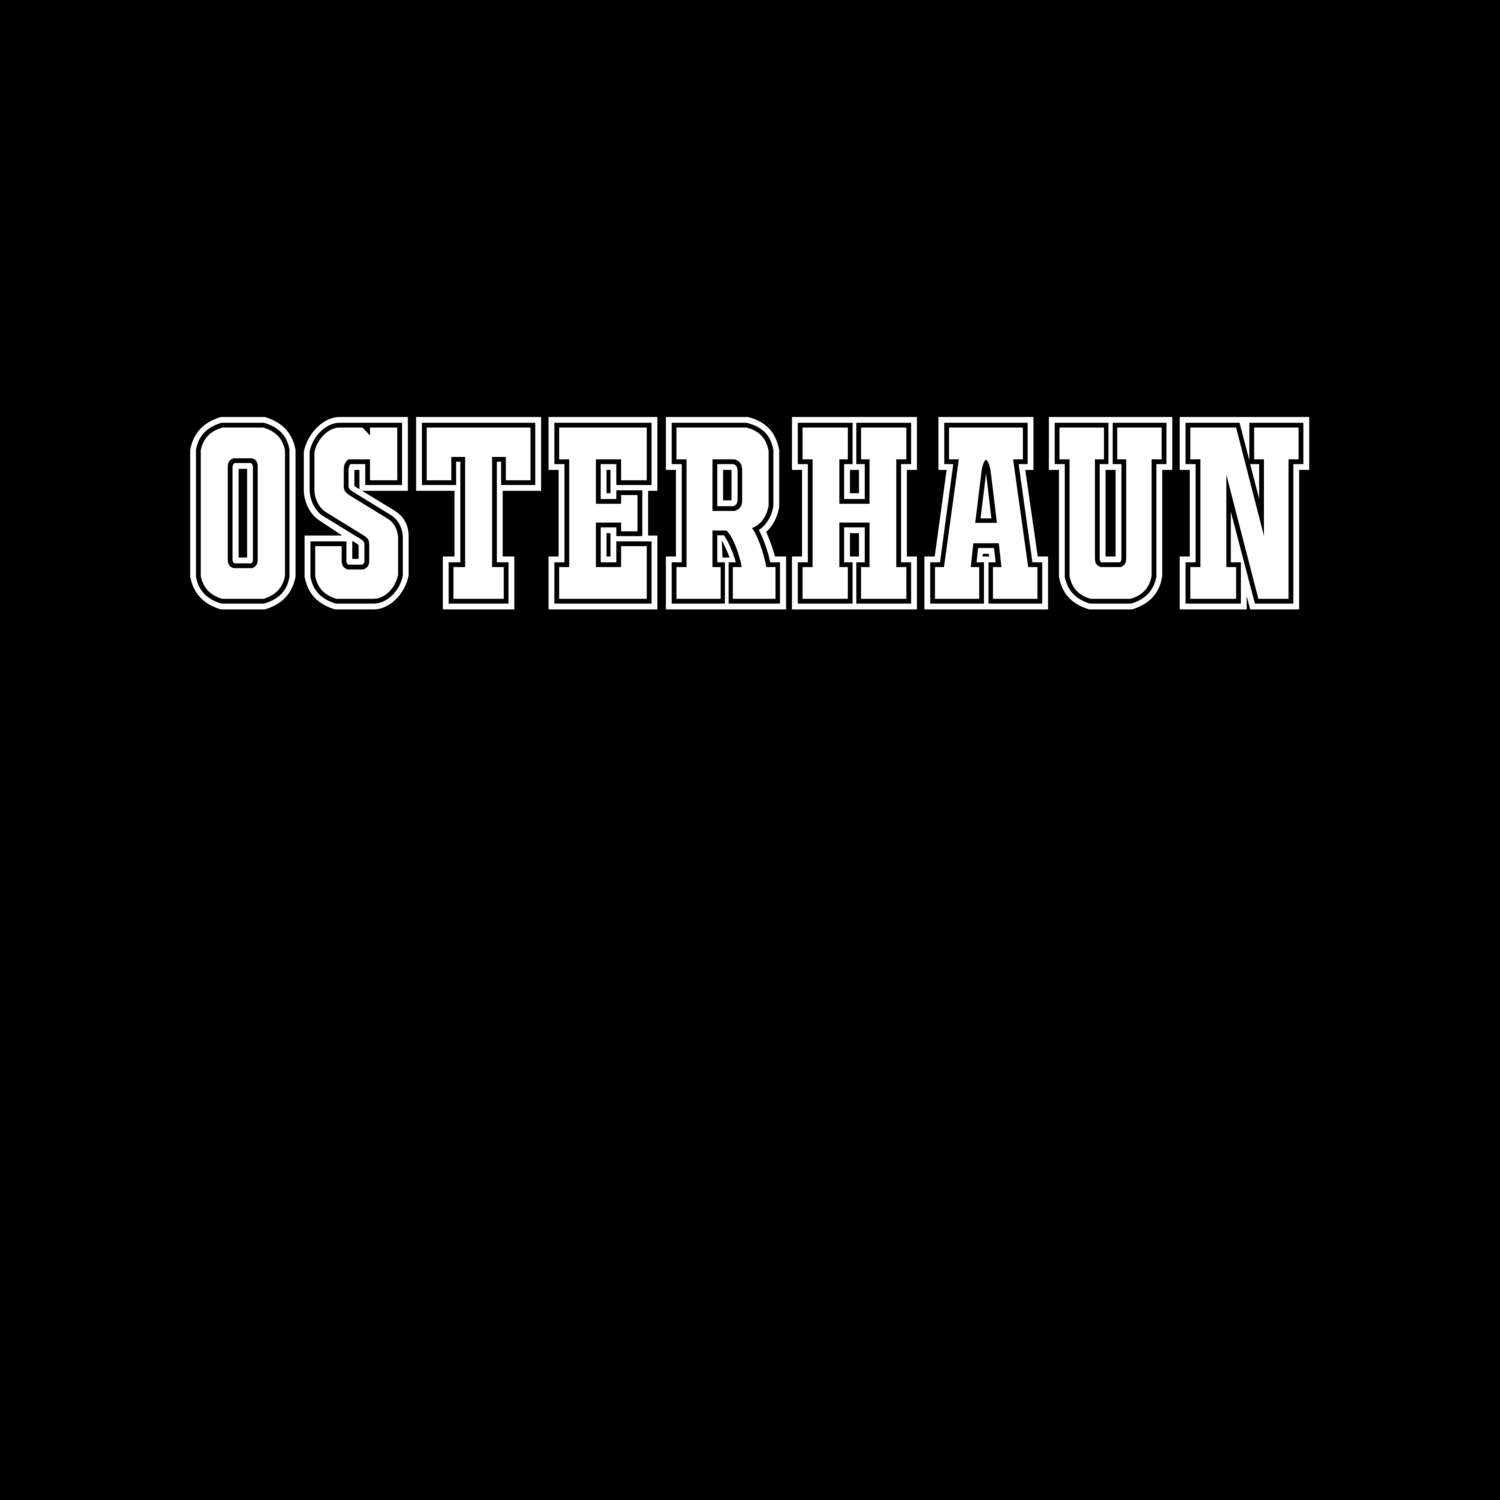 Osterhaun T-Shirt »Classic«